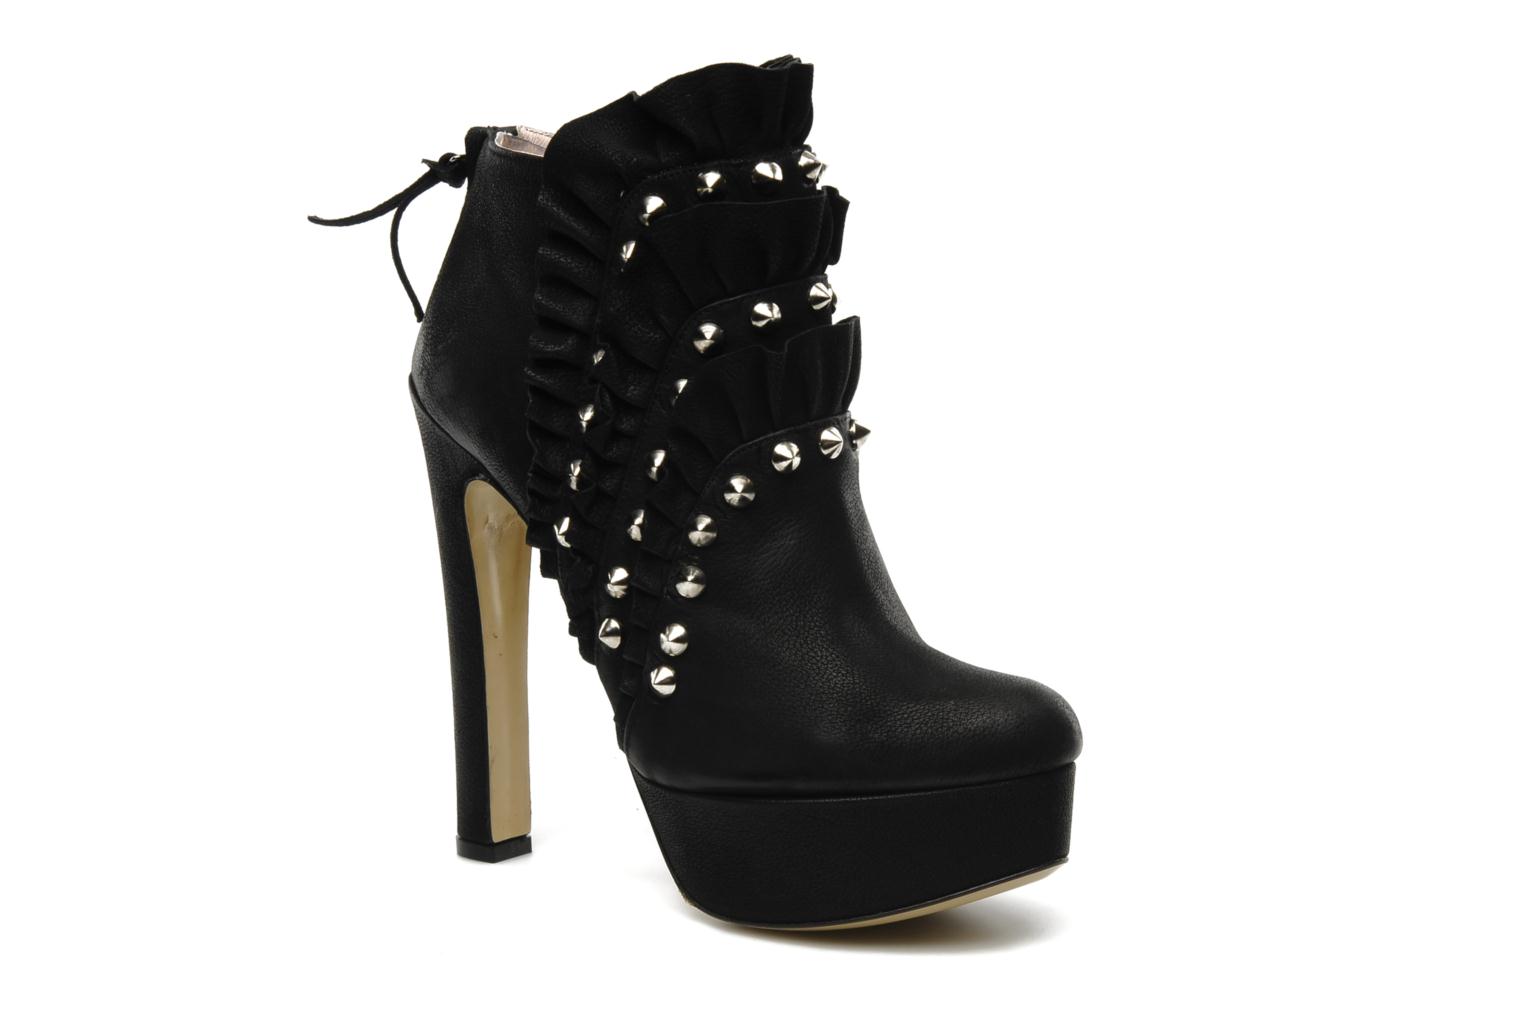 De Siena shoes Elvira Ankle boots in Black at Sarenza.co.uk (107326)